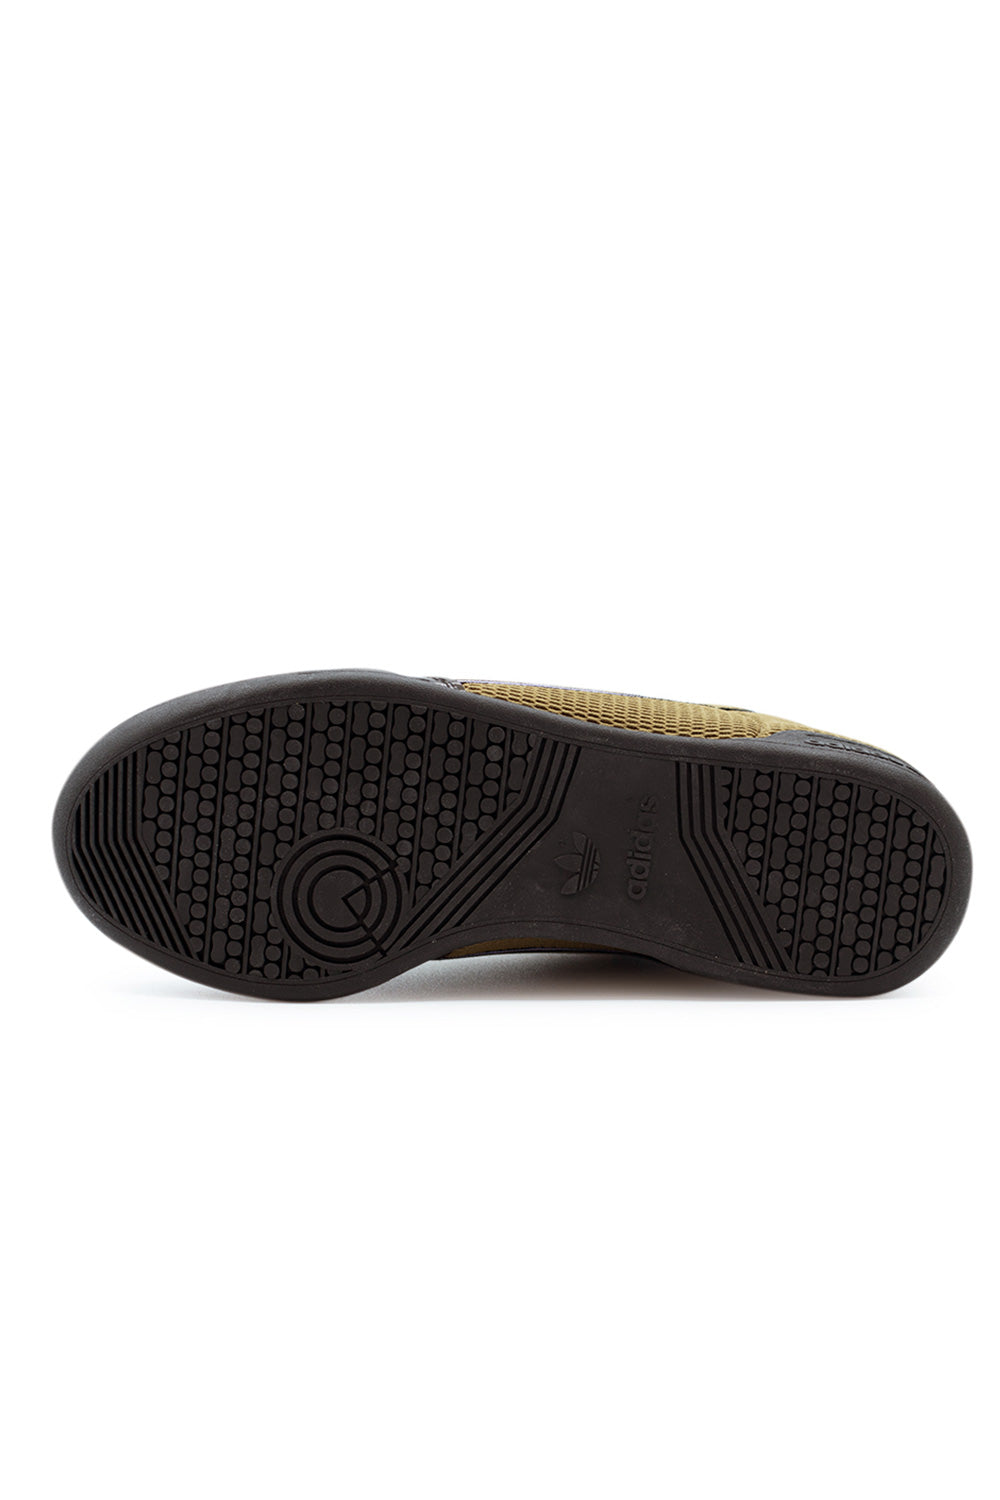 Adidas Continental Shoe (Blondey McCoy) Core Black / Core Black / Magic Lilac - BONKERS